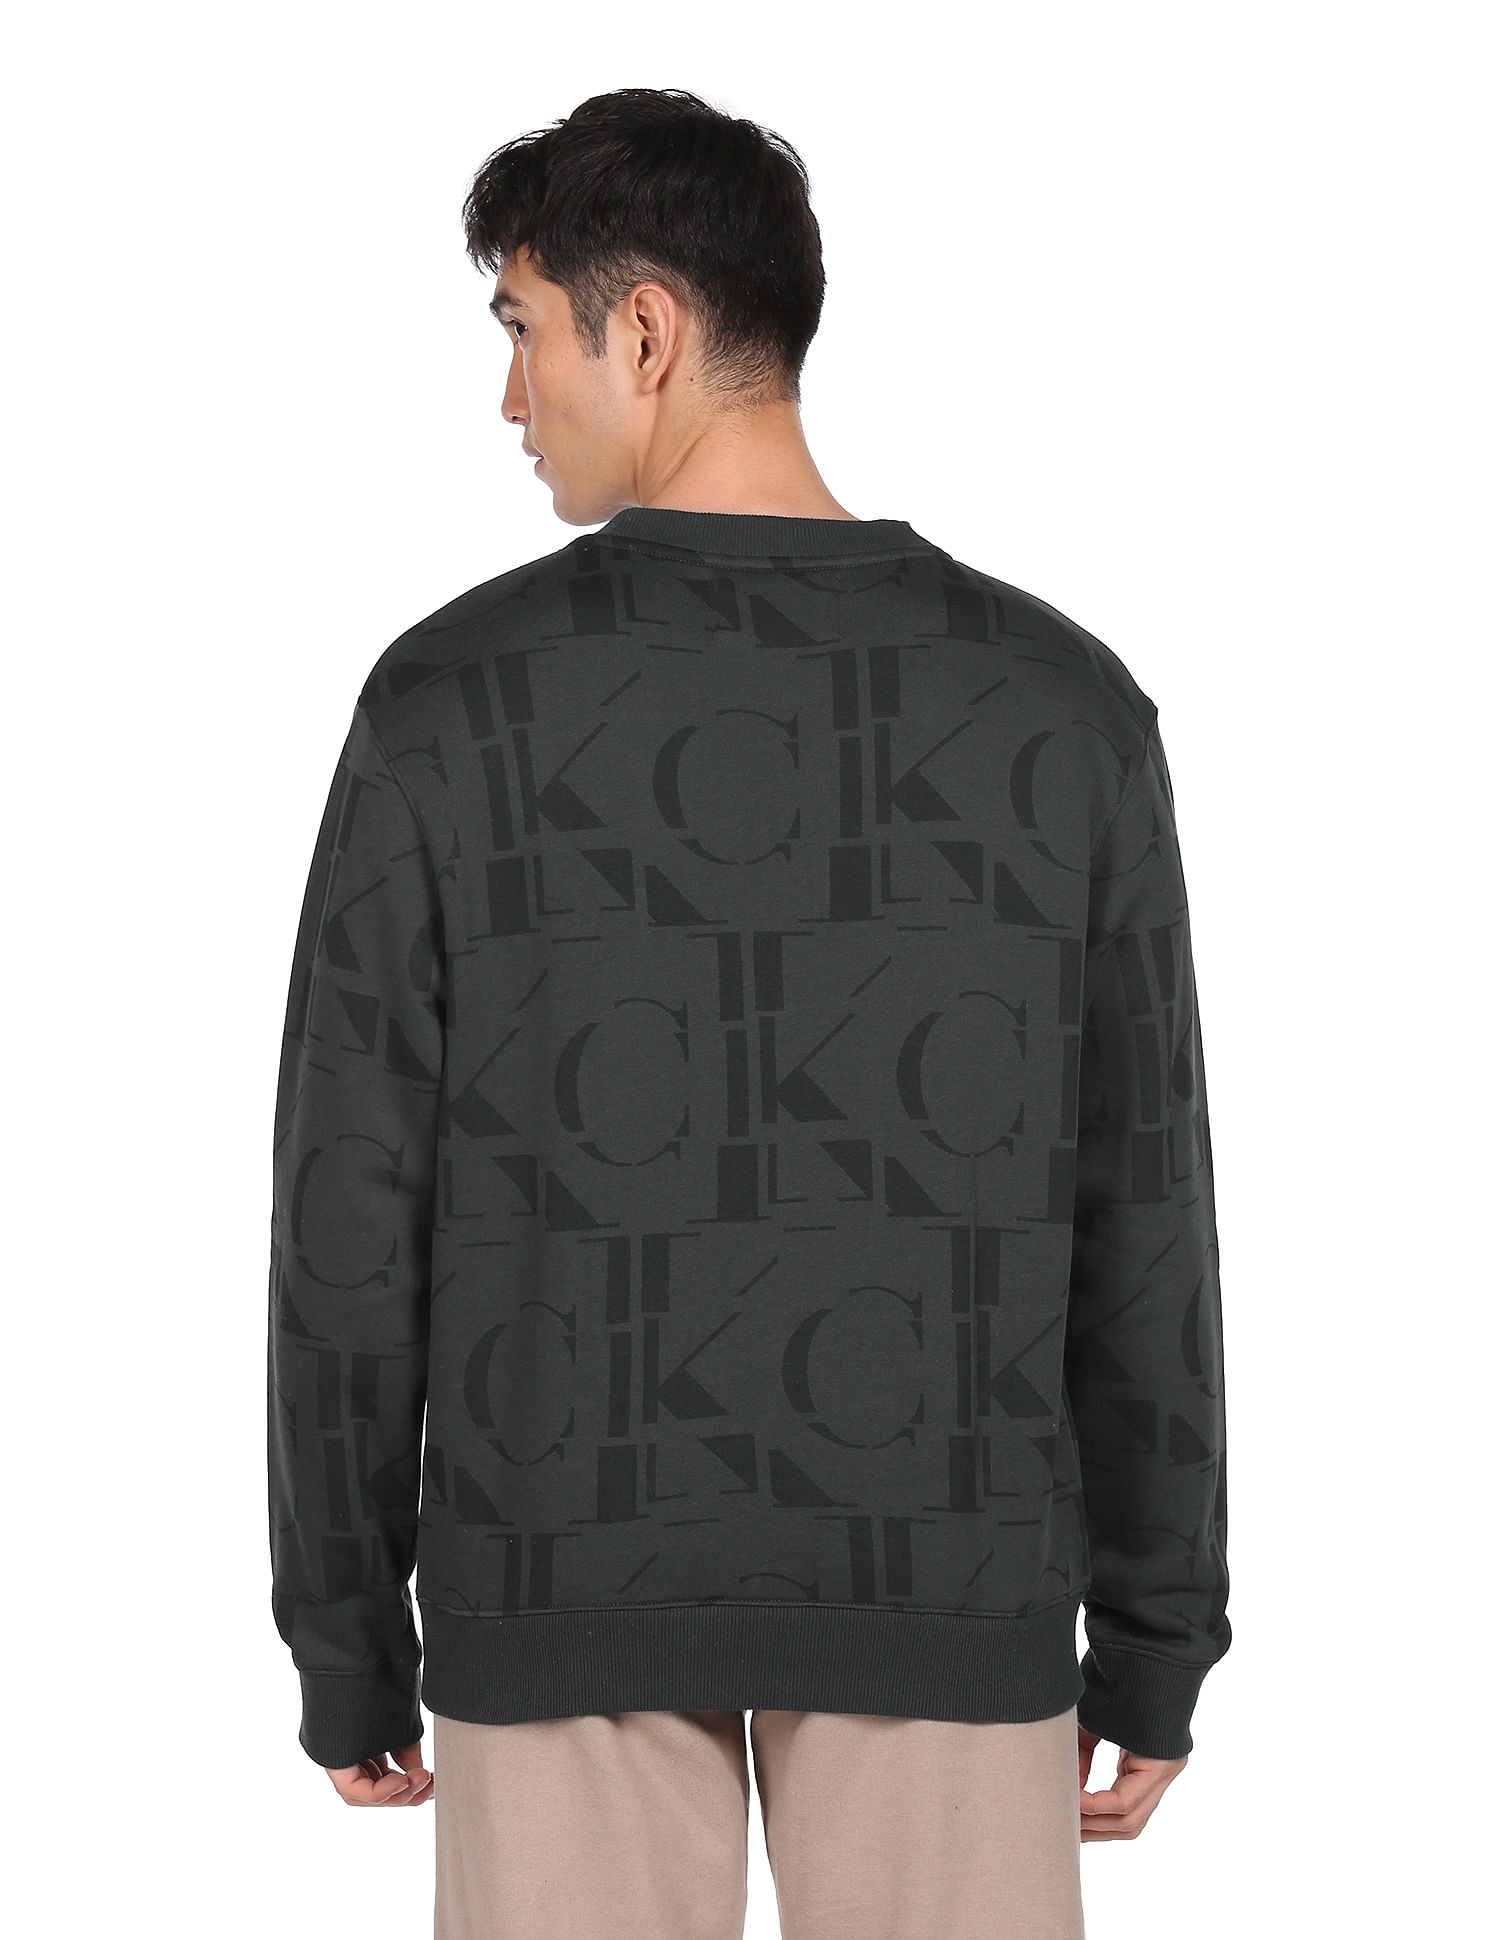 Calvin Klein Jeans sweatshirt with all over logo print black, ASOS